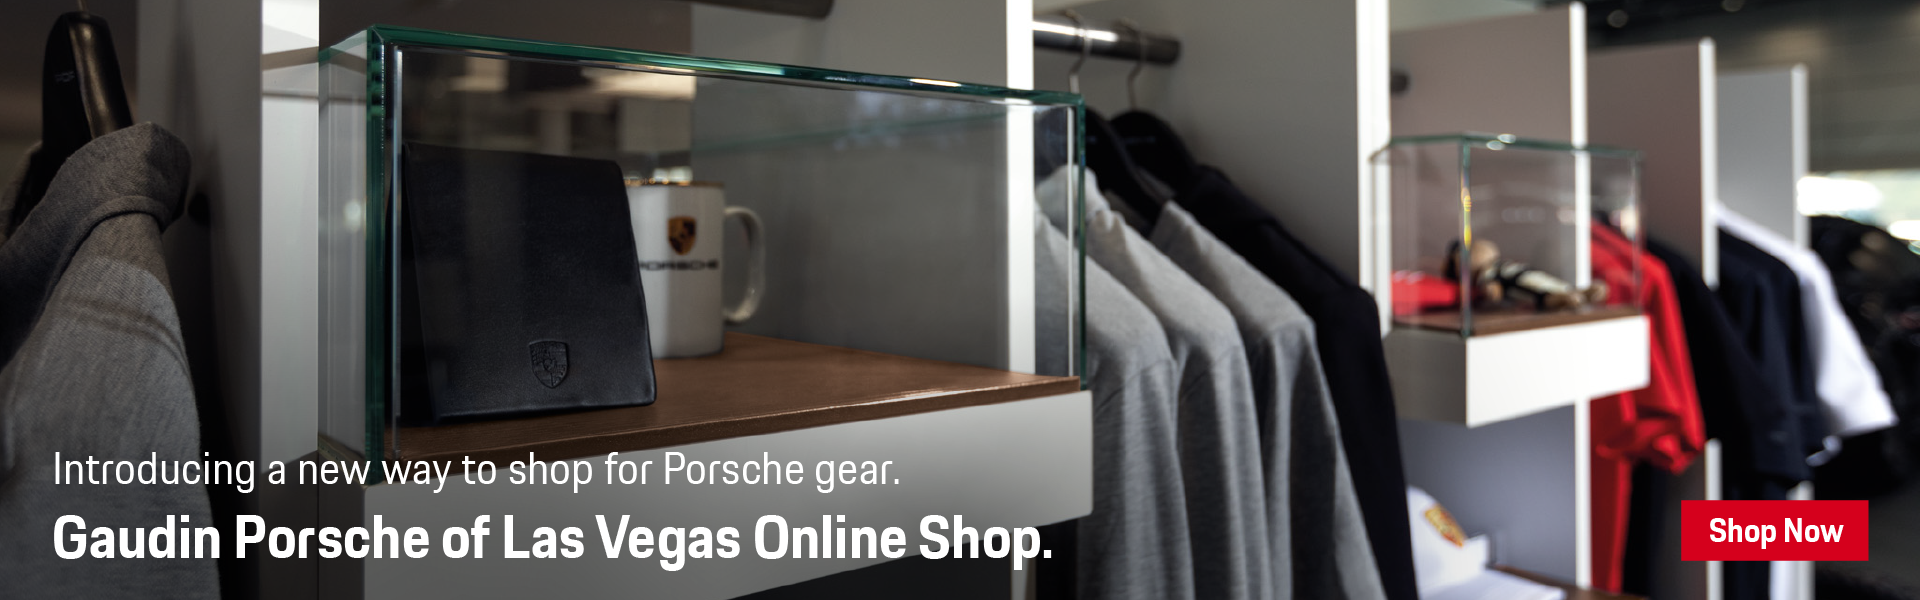 Gaudin Porsche of Las Vegas Online Shop